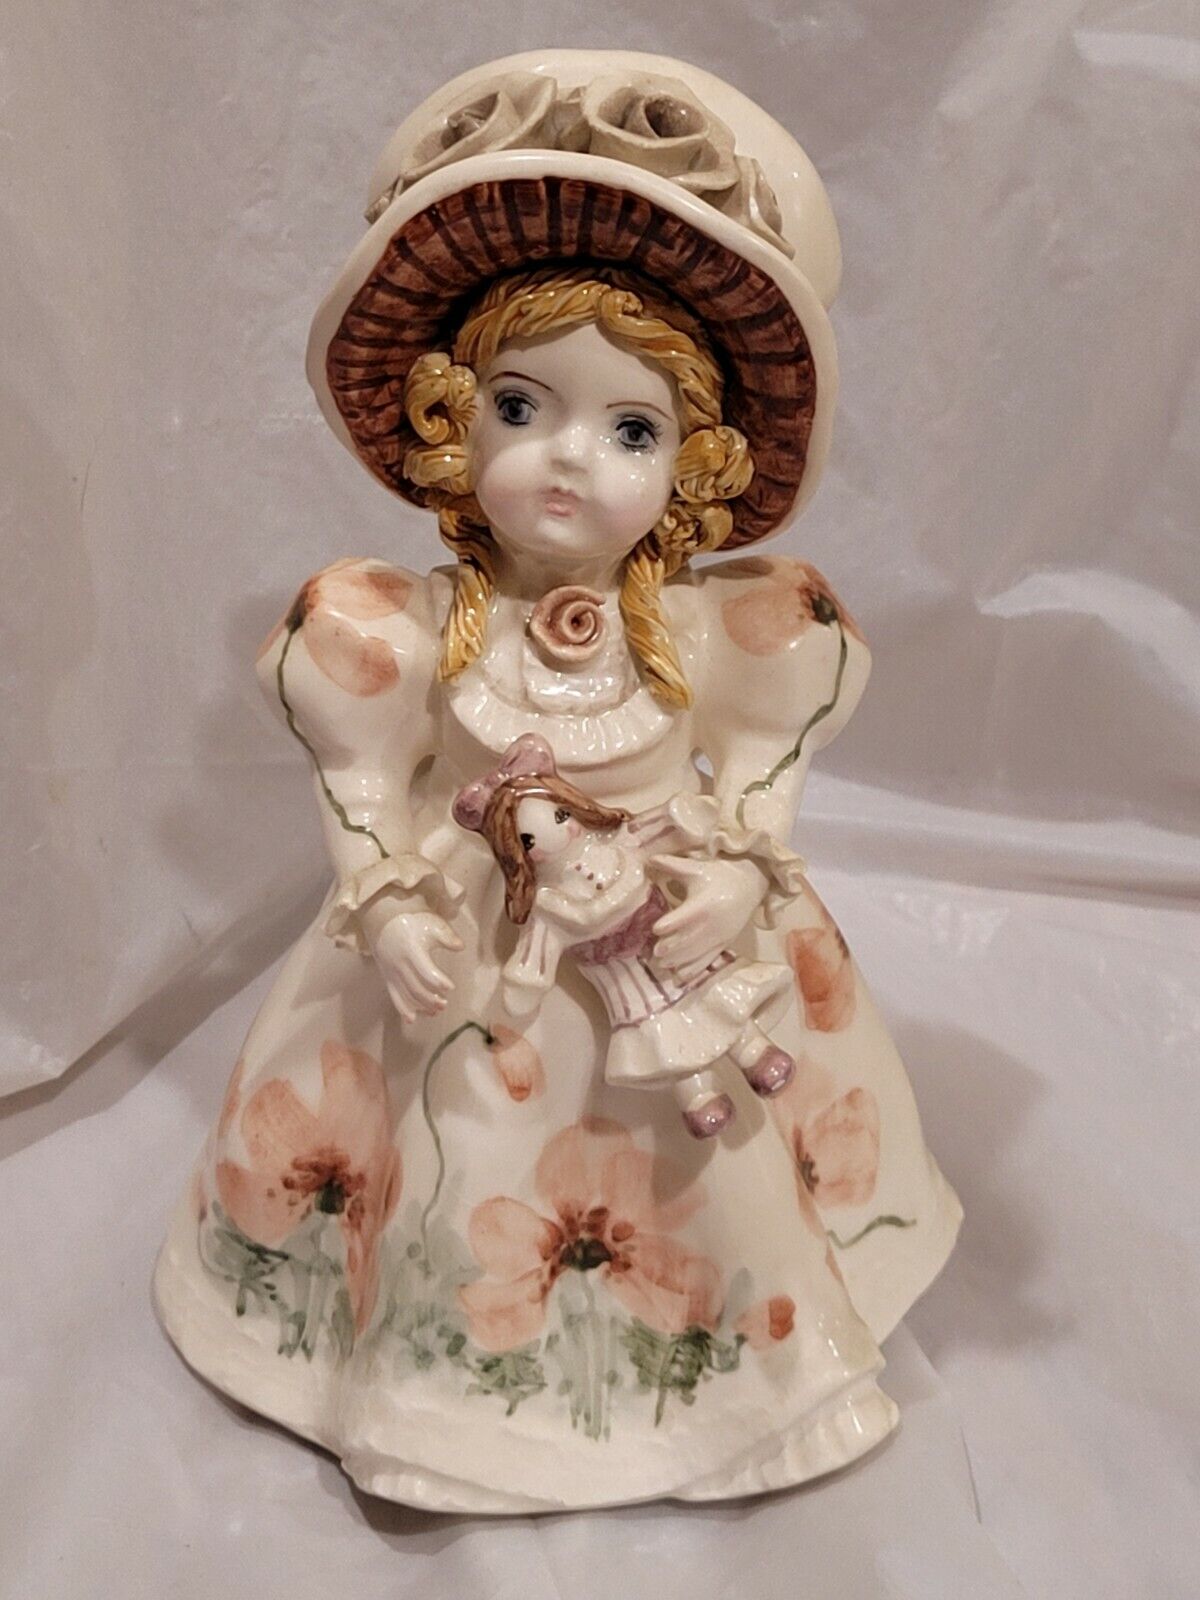 RARE SCHMID Yamada Originals Japan Porcelain Doll Signed Numbered 26/750